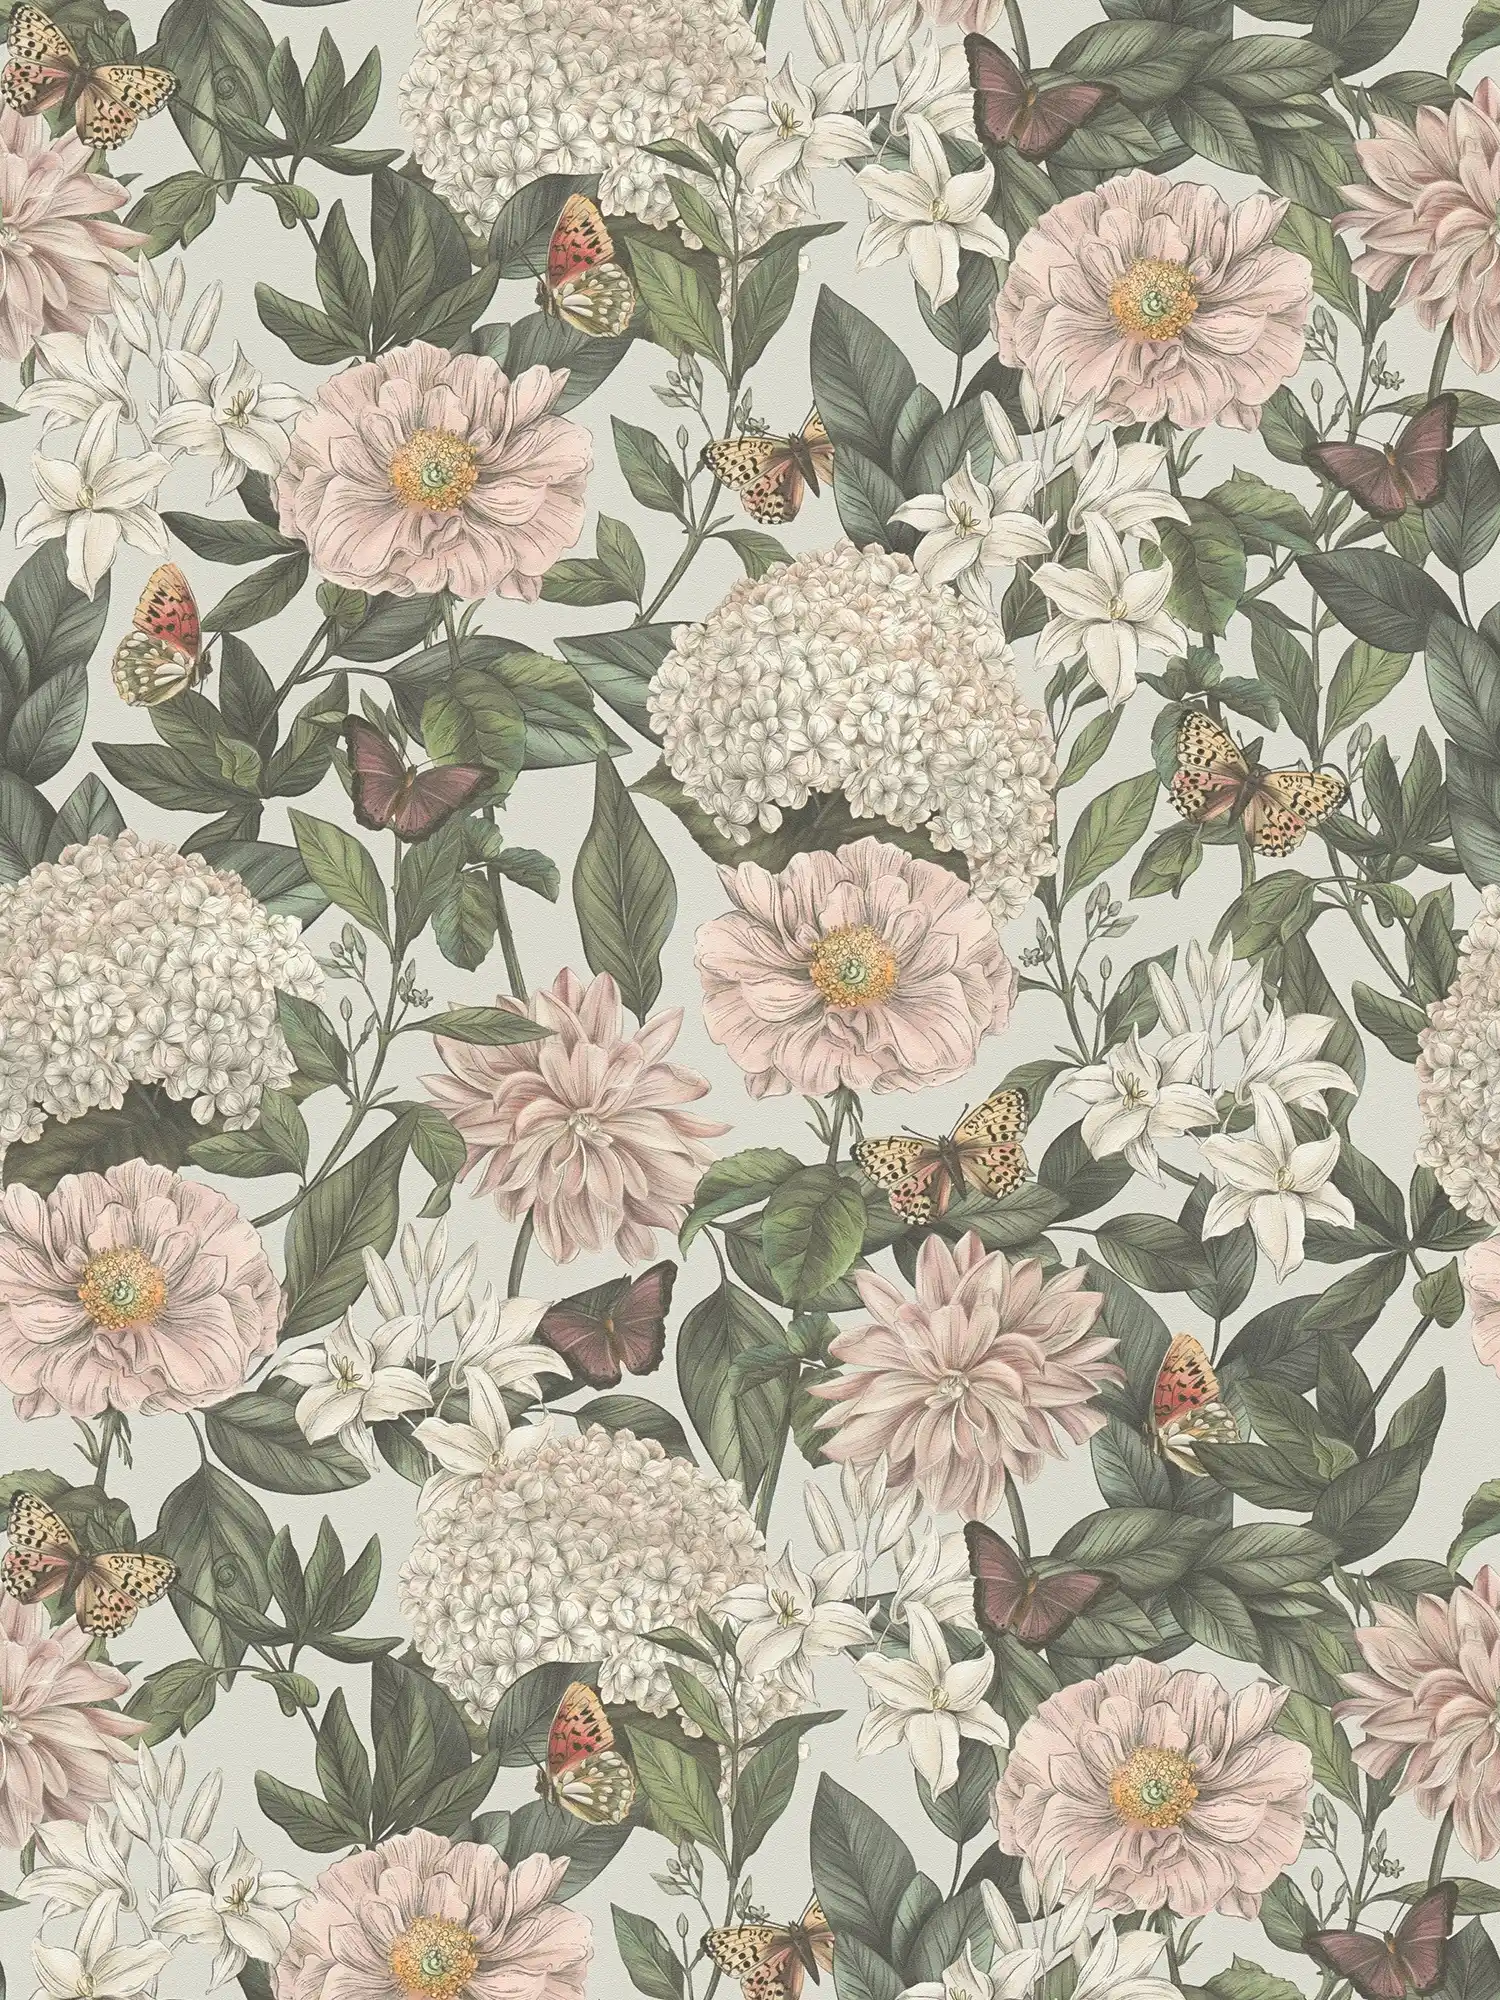 Modern wallpaper floral with animals & flowers textured matt - light grey, white, dark green
